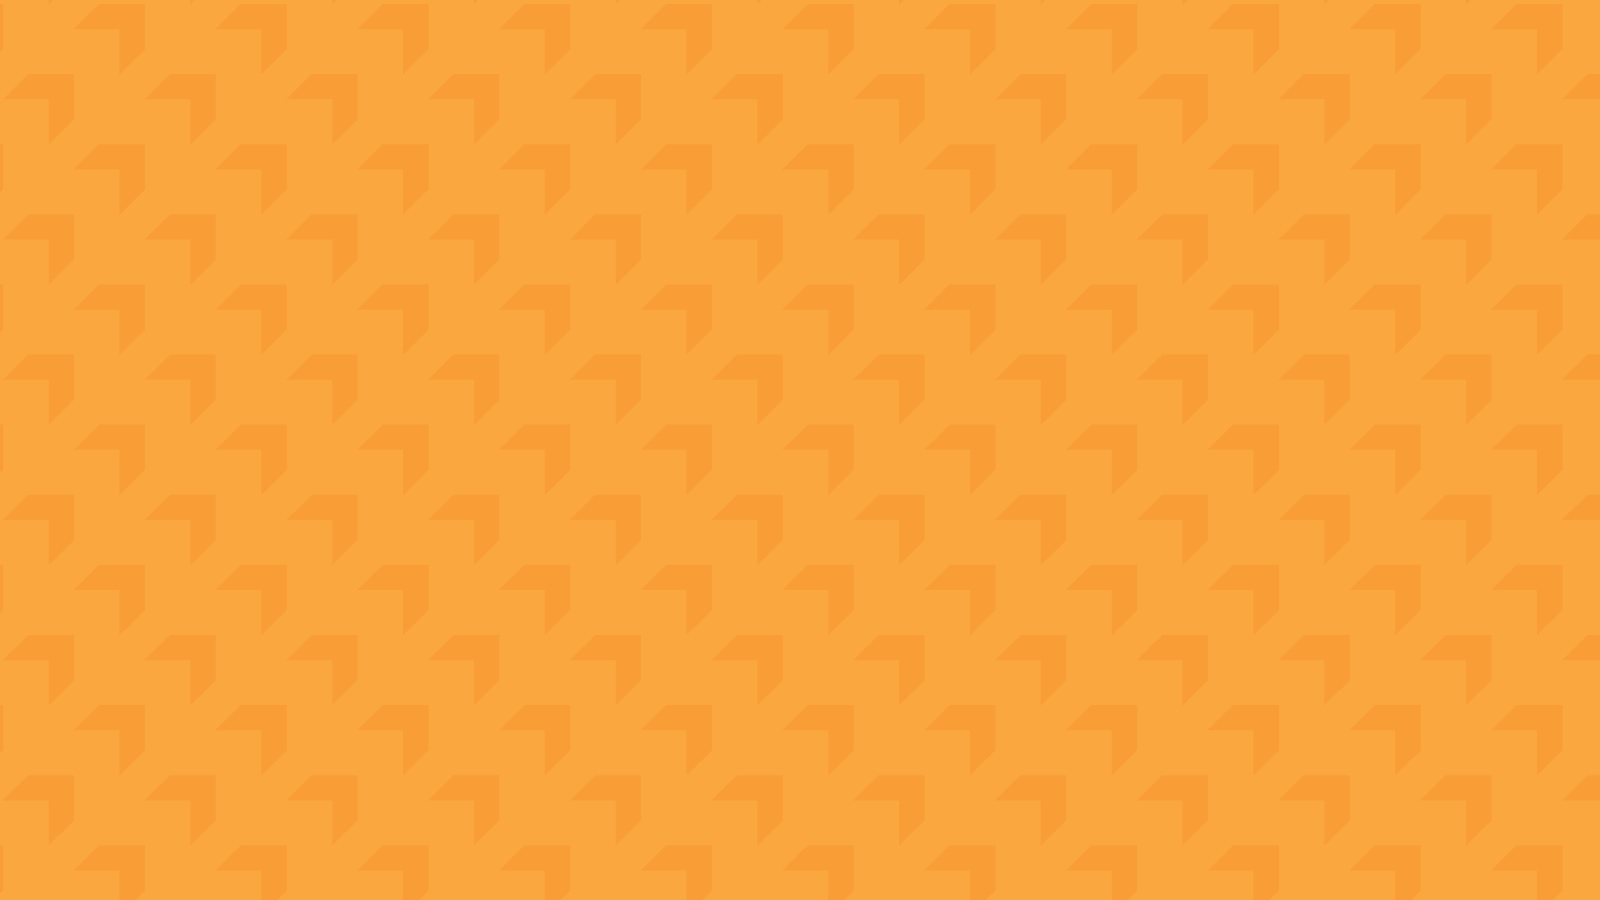 Chevron Tangerine Background